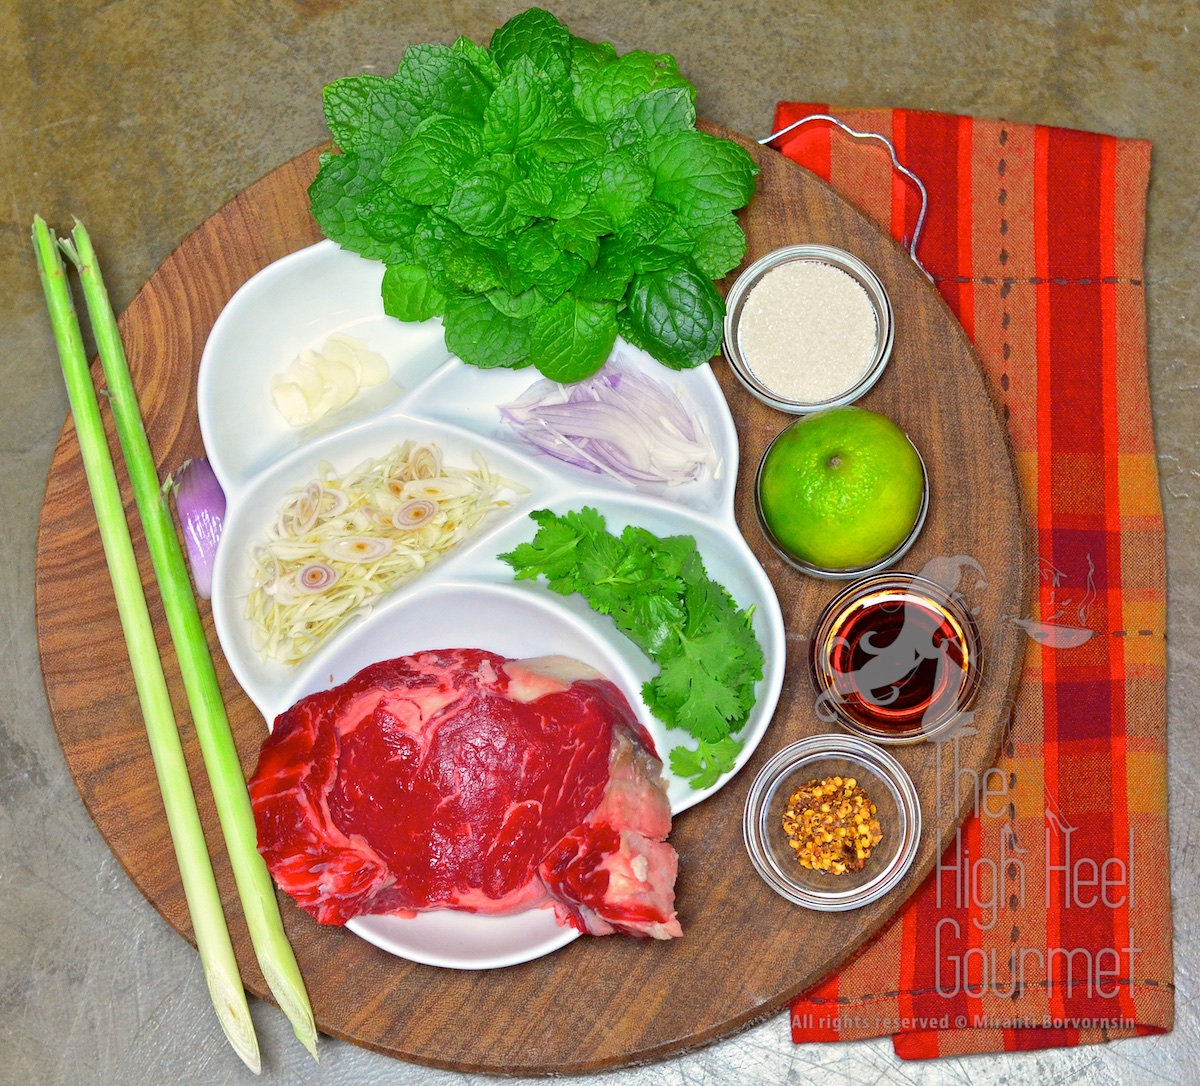 Thai Grilled Beef Salad - Yum Neau Yang by The High Heel Gourmet 10